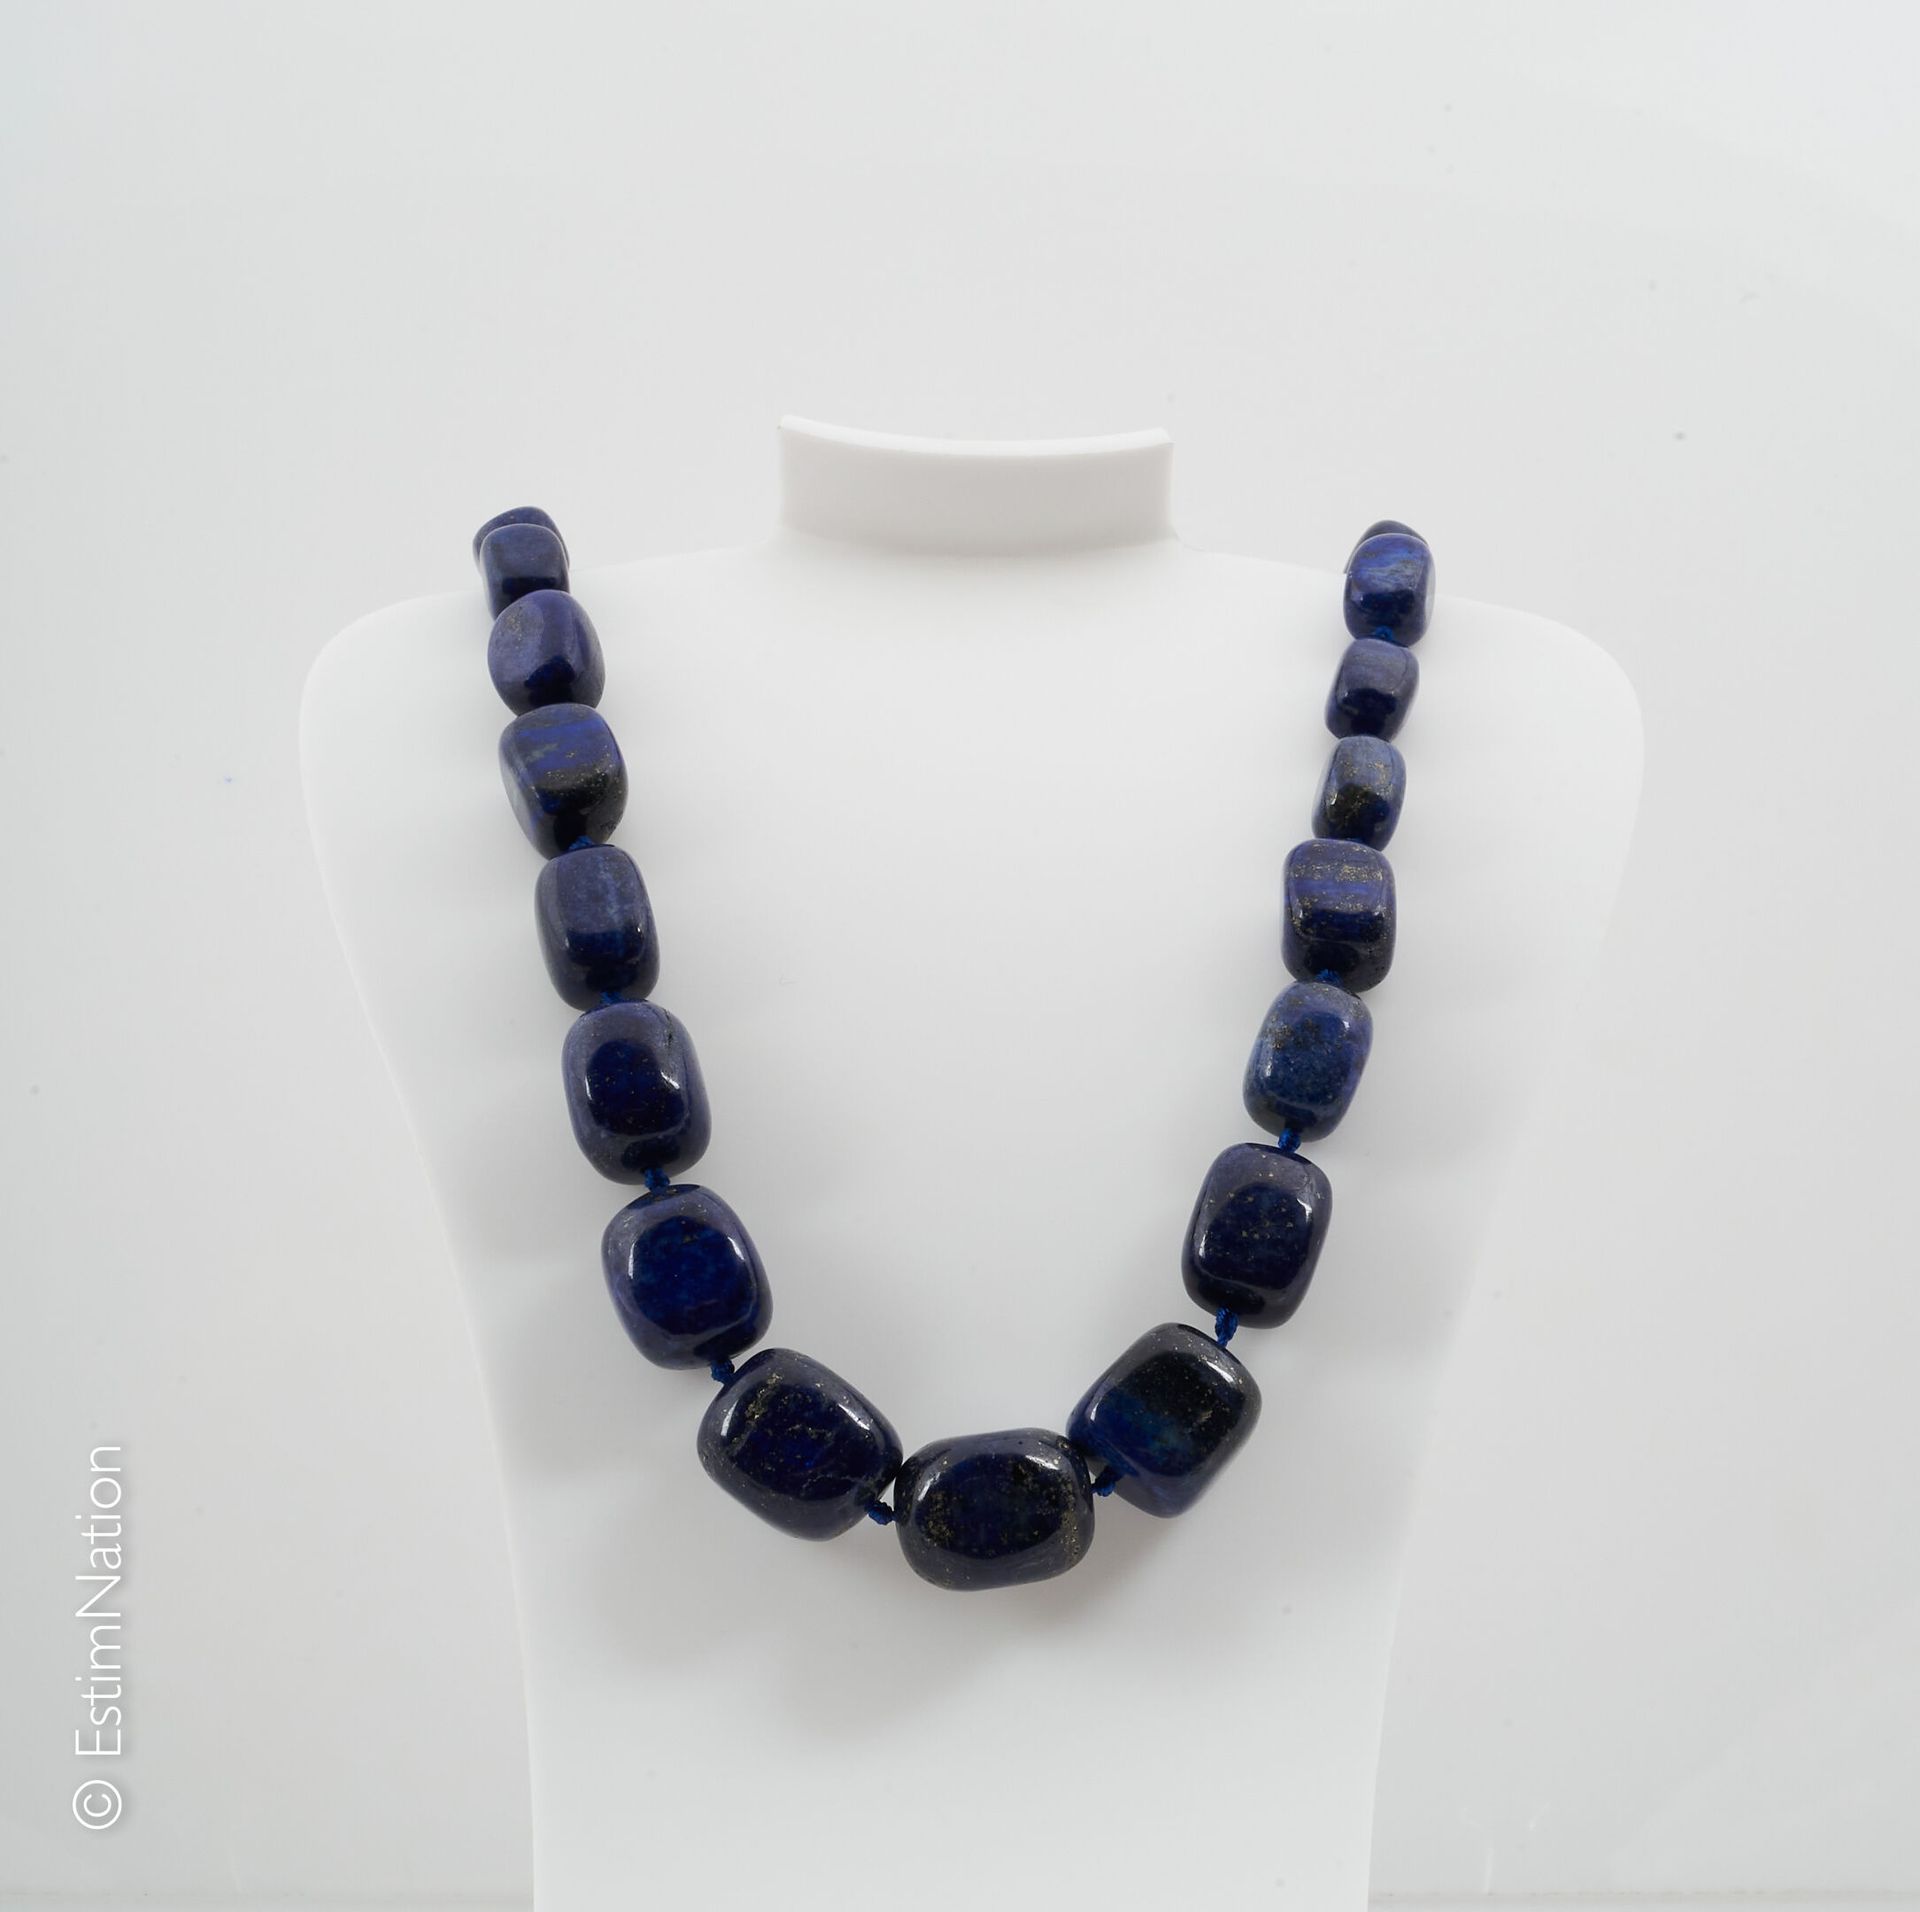 COLLIER LAPIS LAZULI Collar de lapislázuli. Cierre metálico. 

Longitud : 49 cm